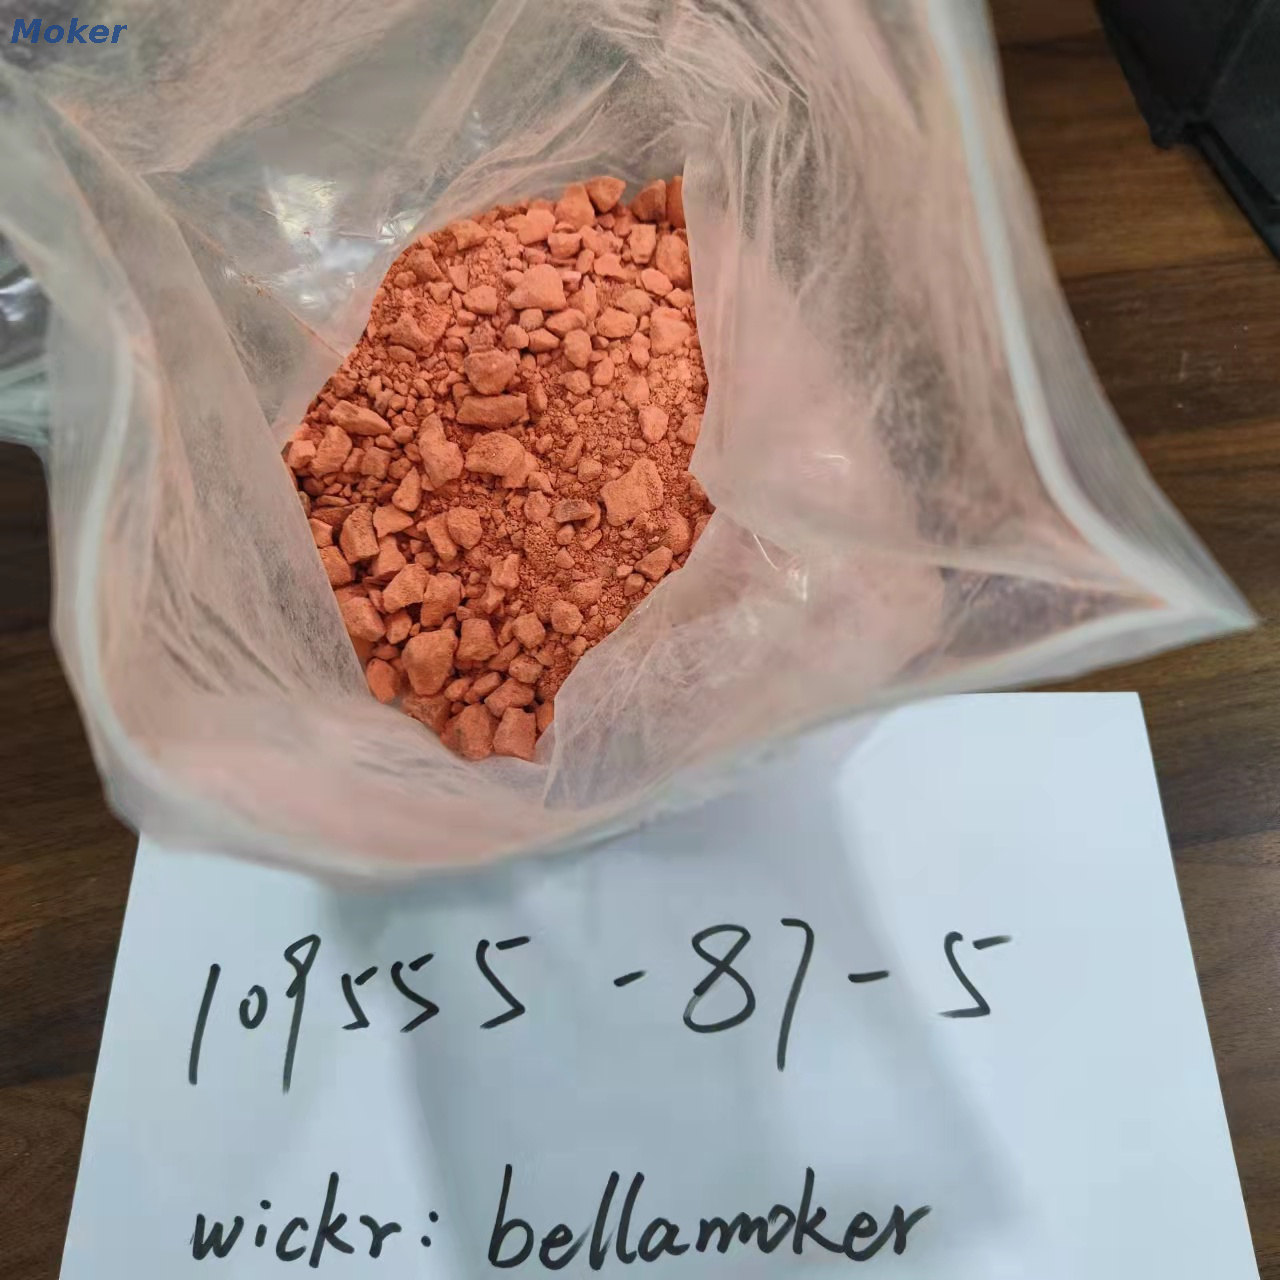 99.8% purity CAS 109555-87-5 3- (1-Naphthoyl) Indole Pink Powder 